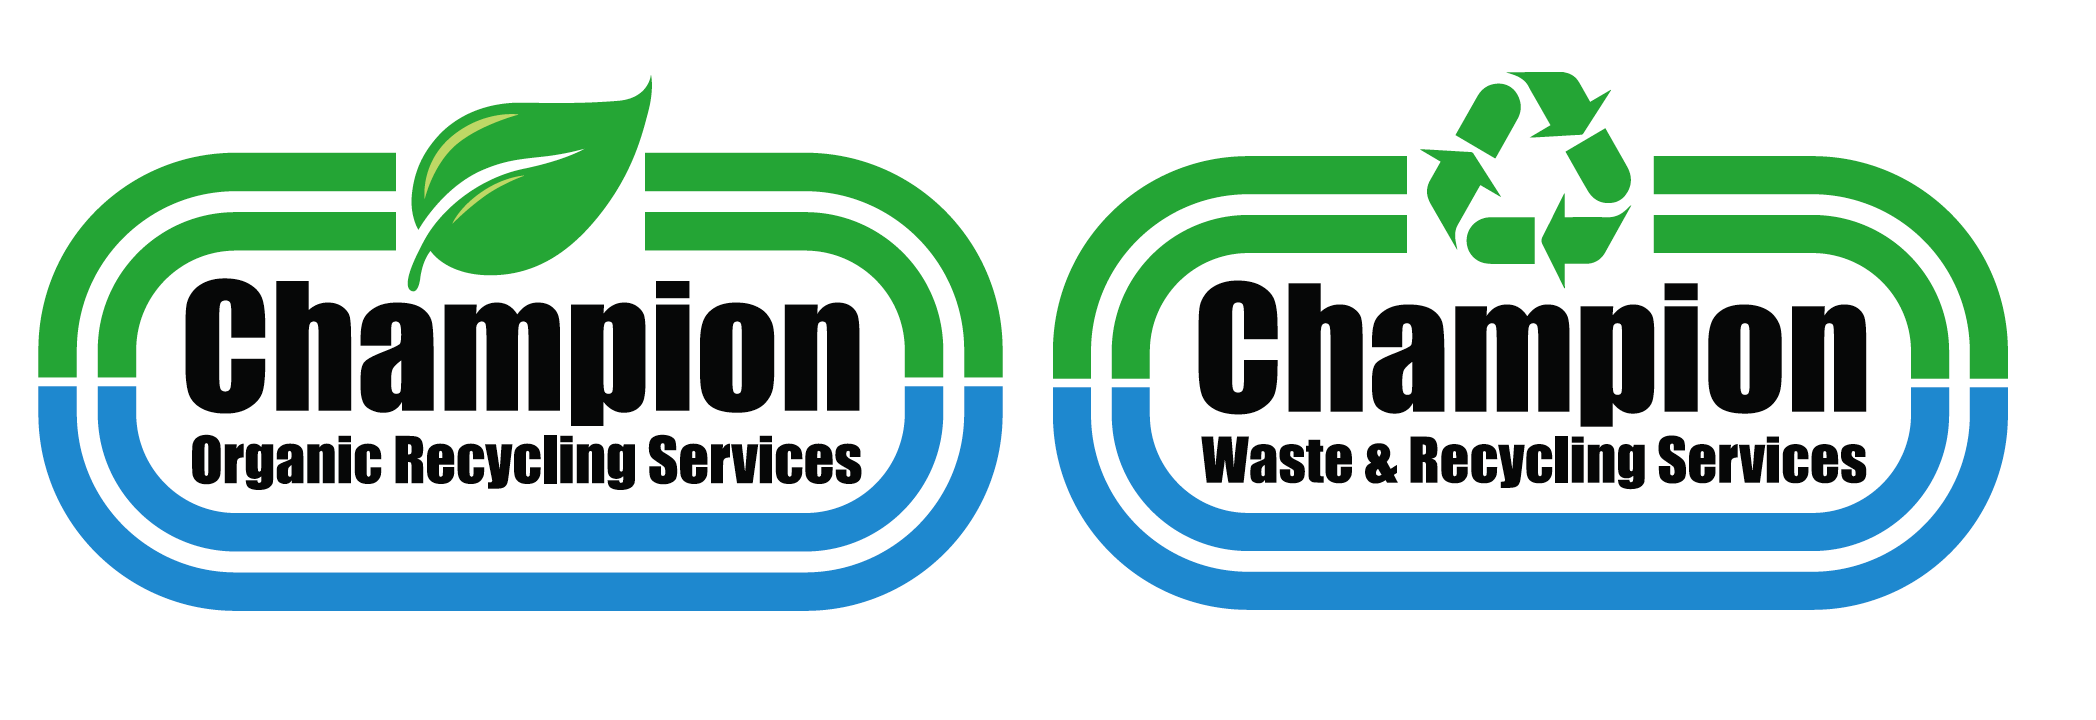 Champion Organic Recycling Services logo 